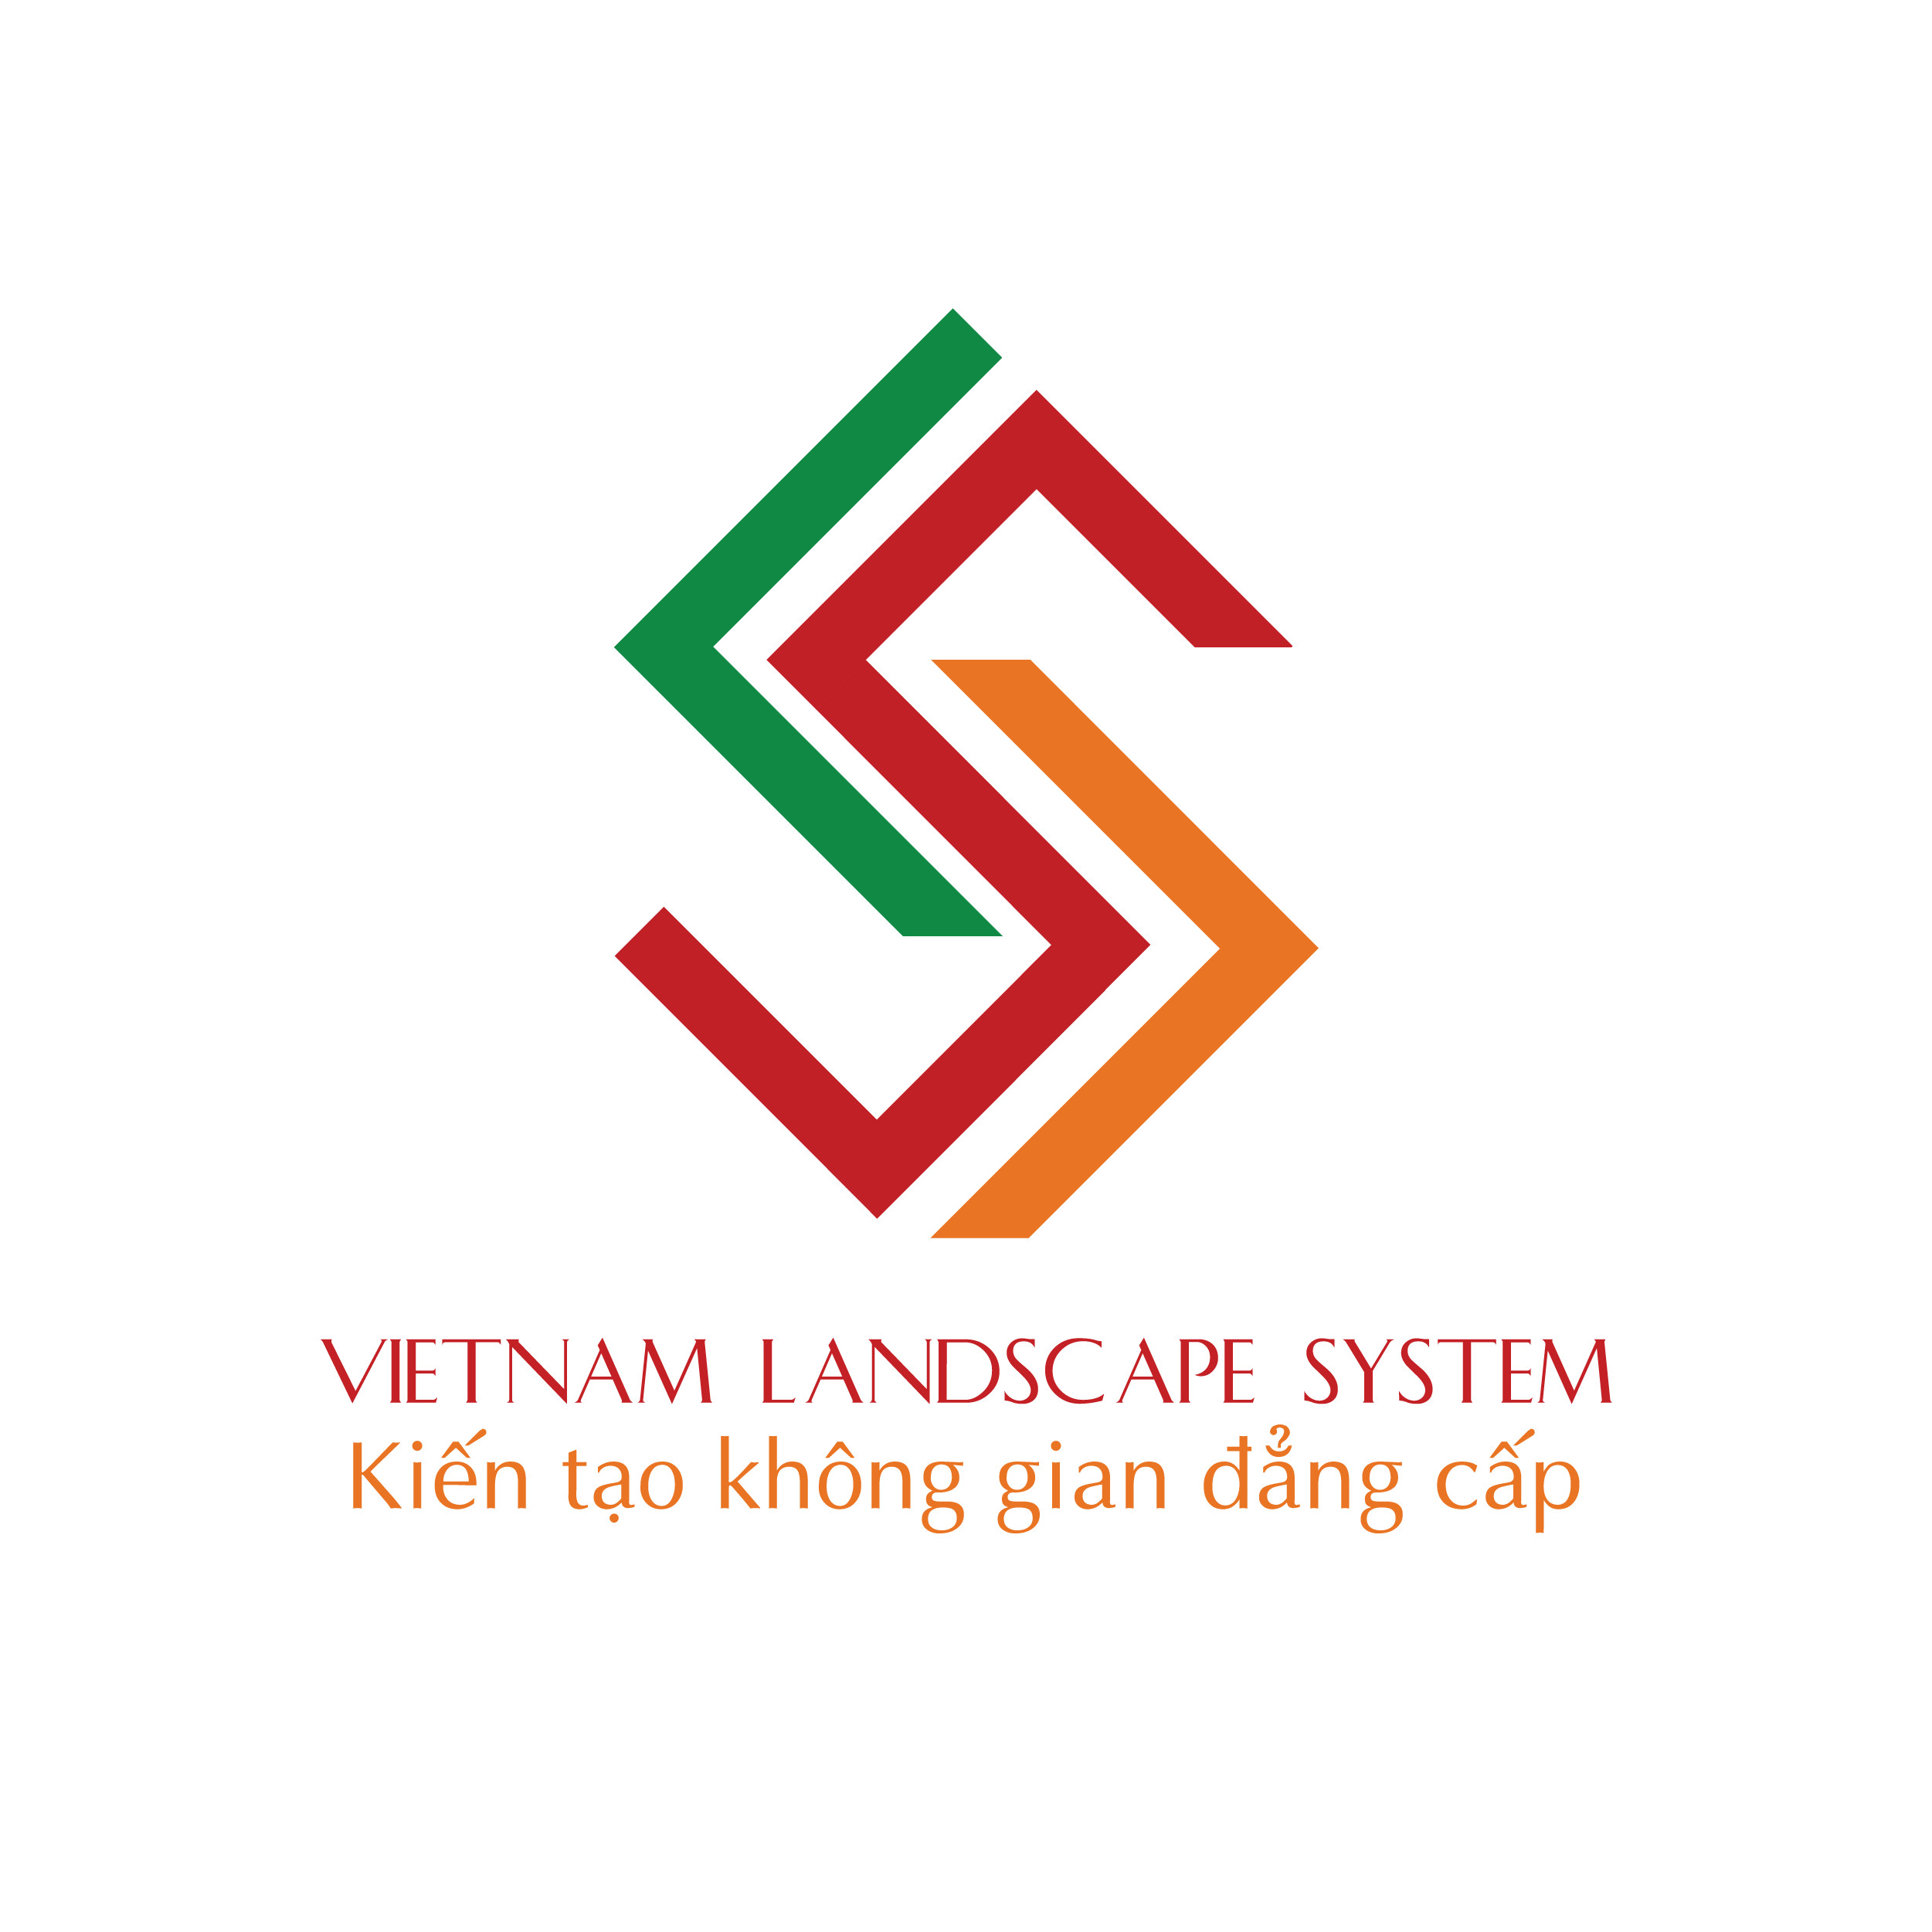 VietNam Landscape System